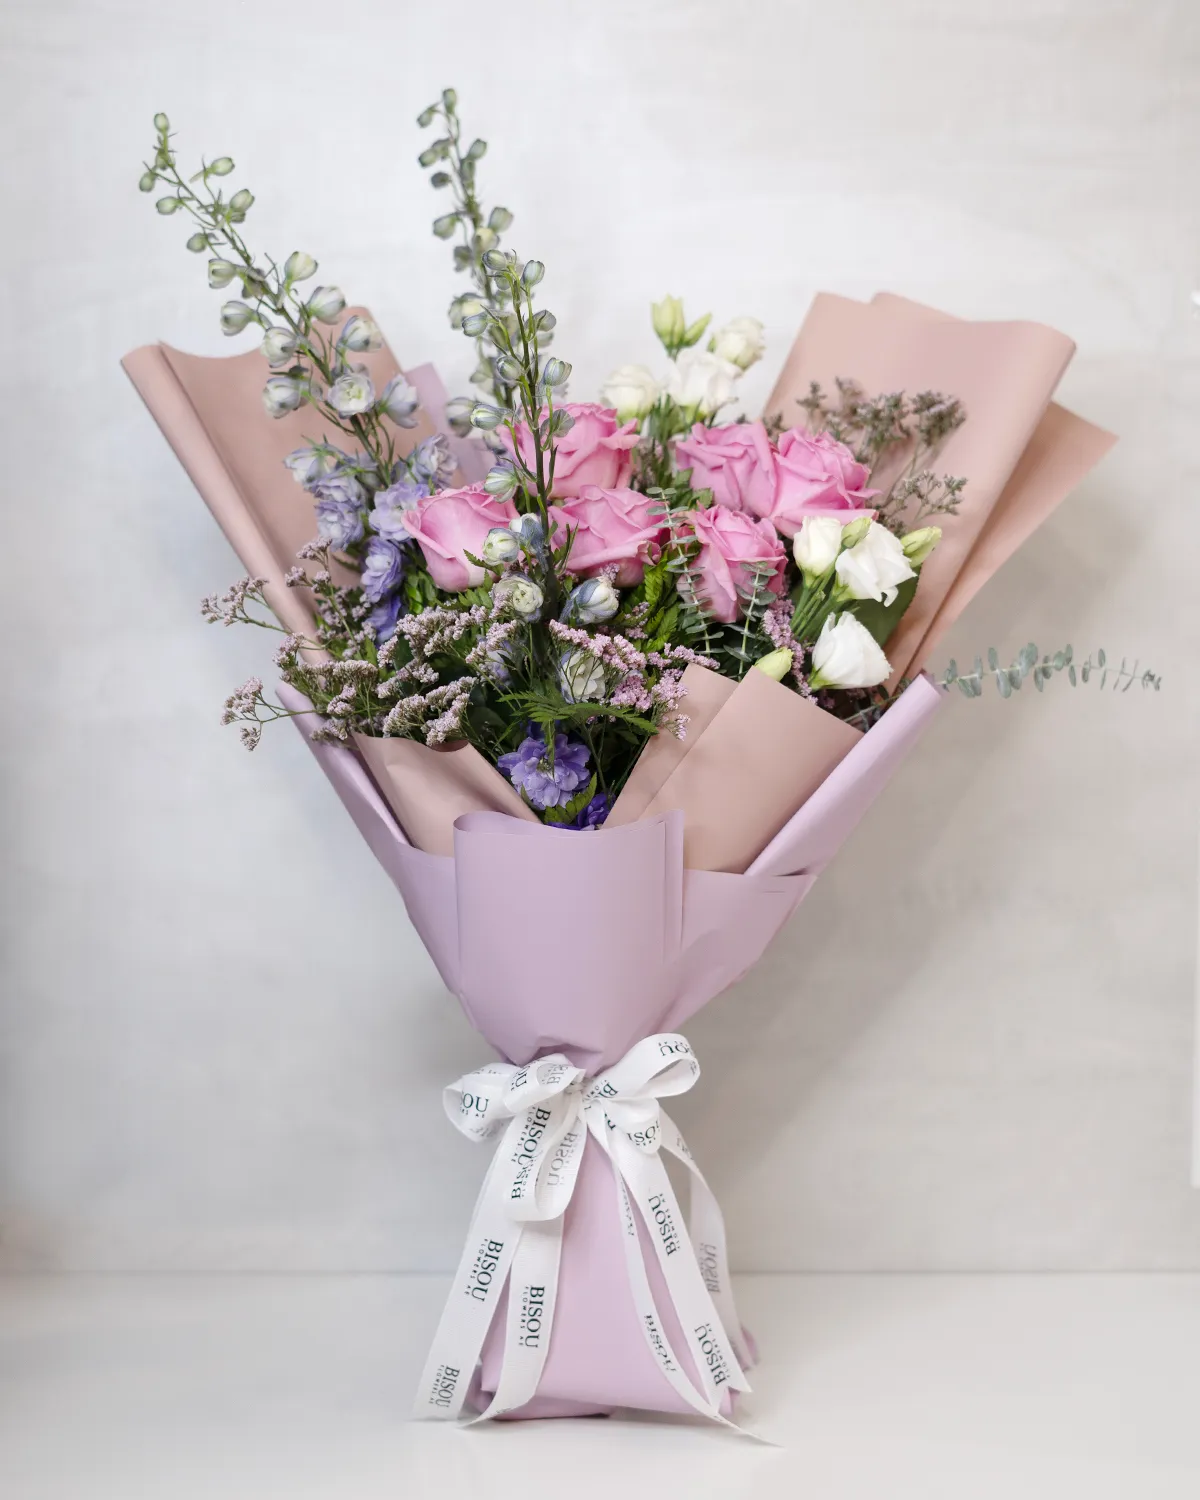 Delphinium Dreams bouquet of pink roses, delphinium, white lisianthus with fillers of pink limonium